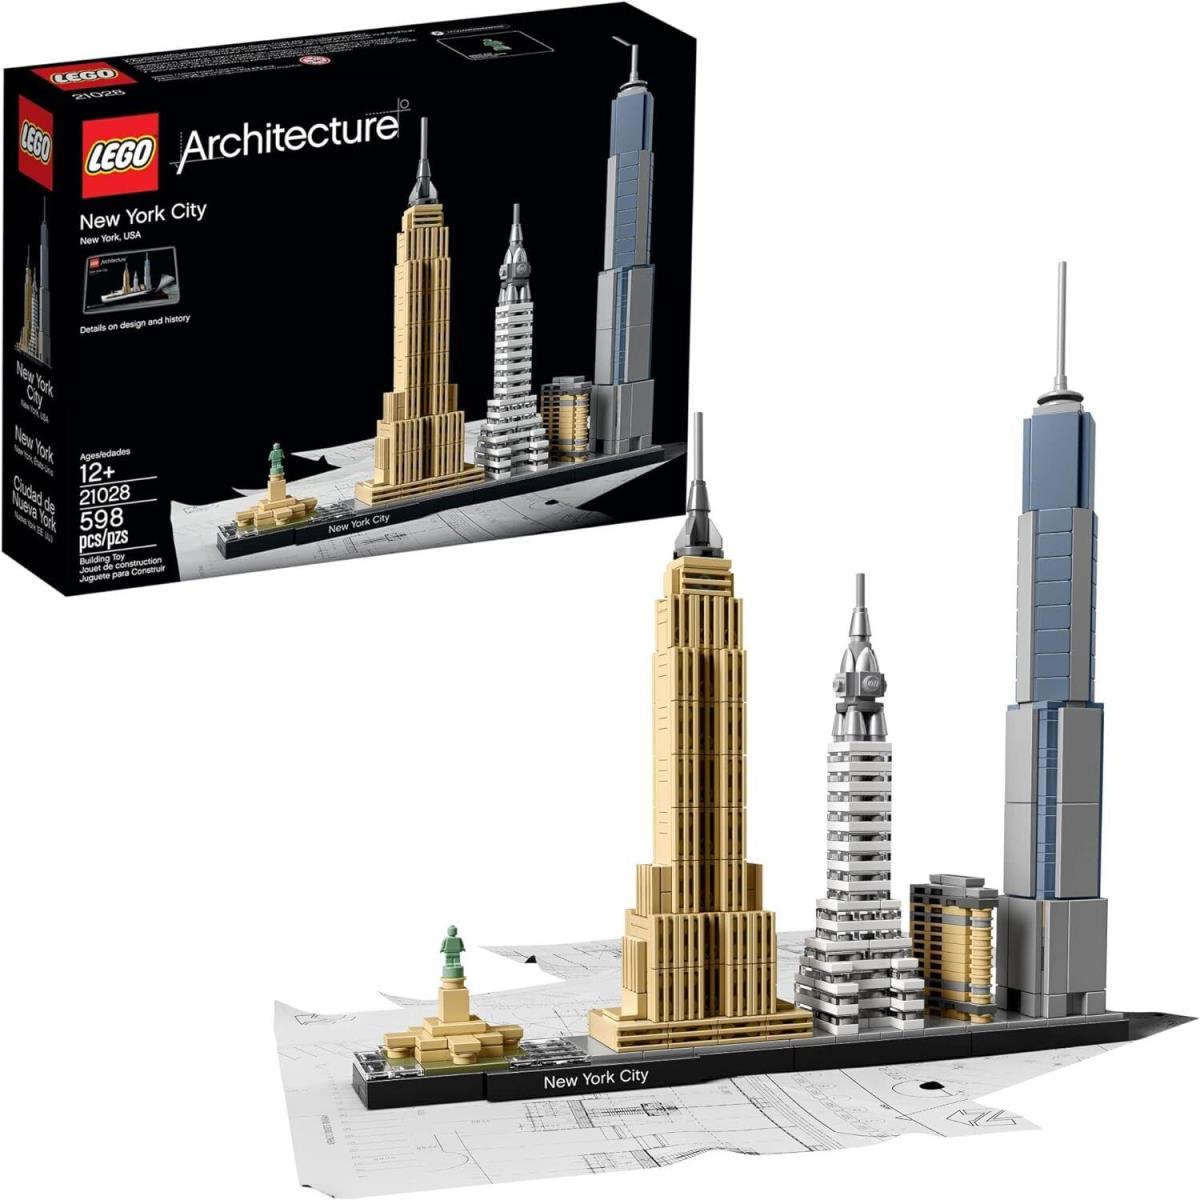 Lego Architecture 21028 York City Skyline Building Set Free